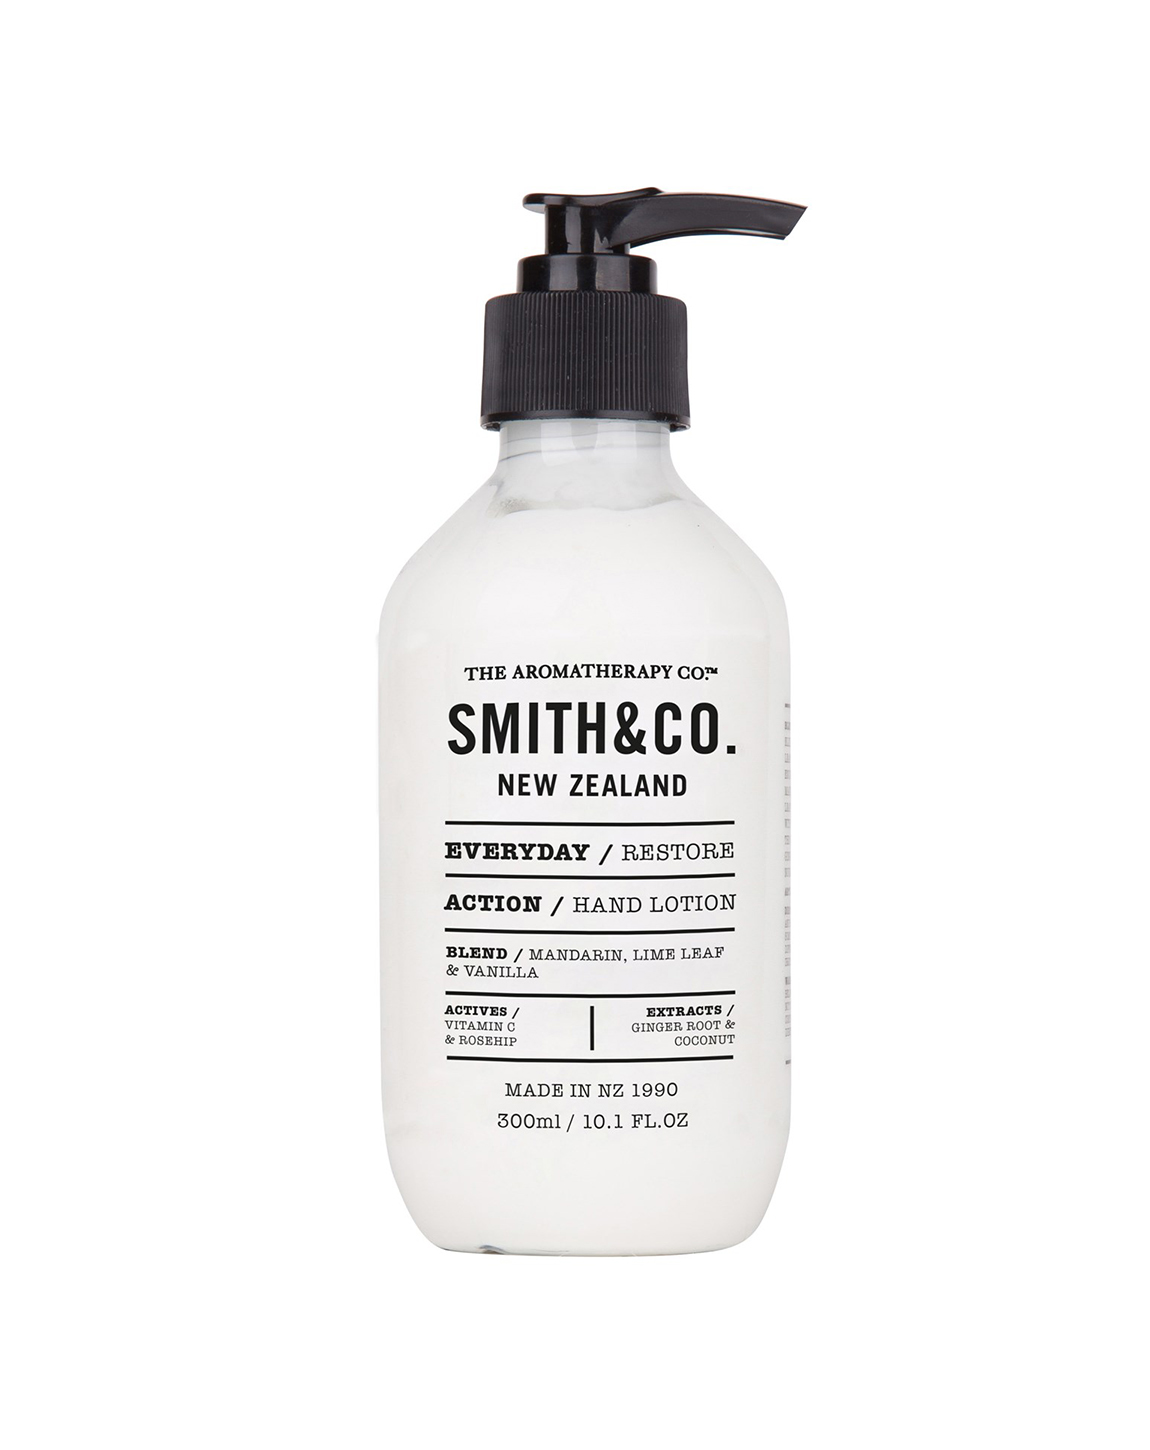 Smith & Co Restore Hand Cream, $18.99 from Smith & Caughey's